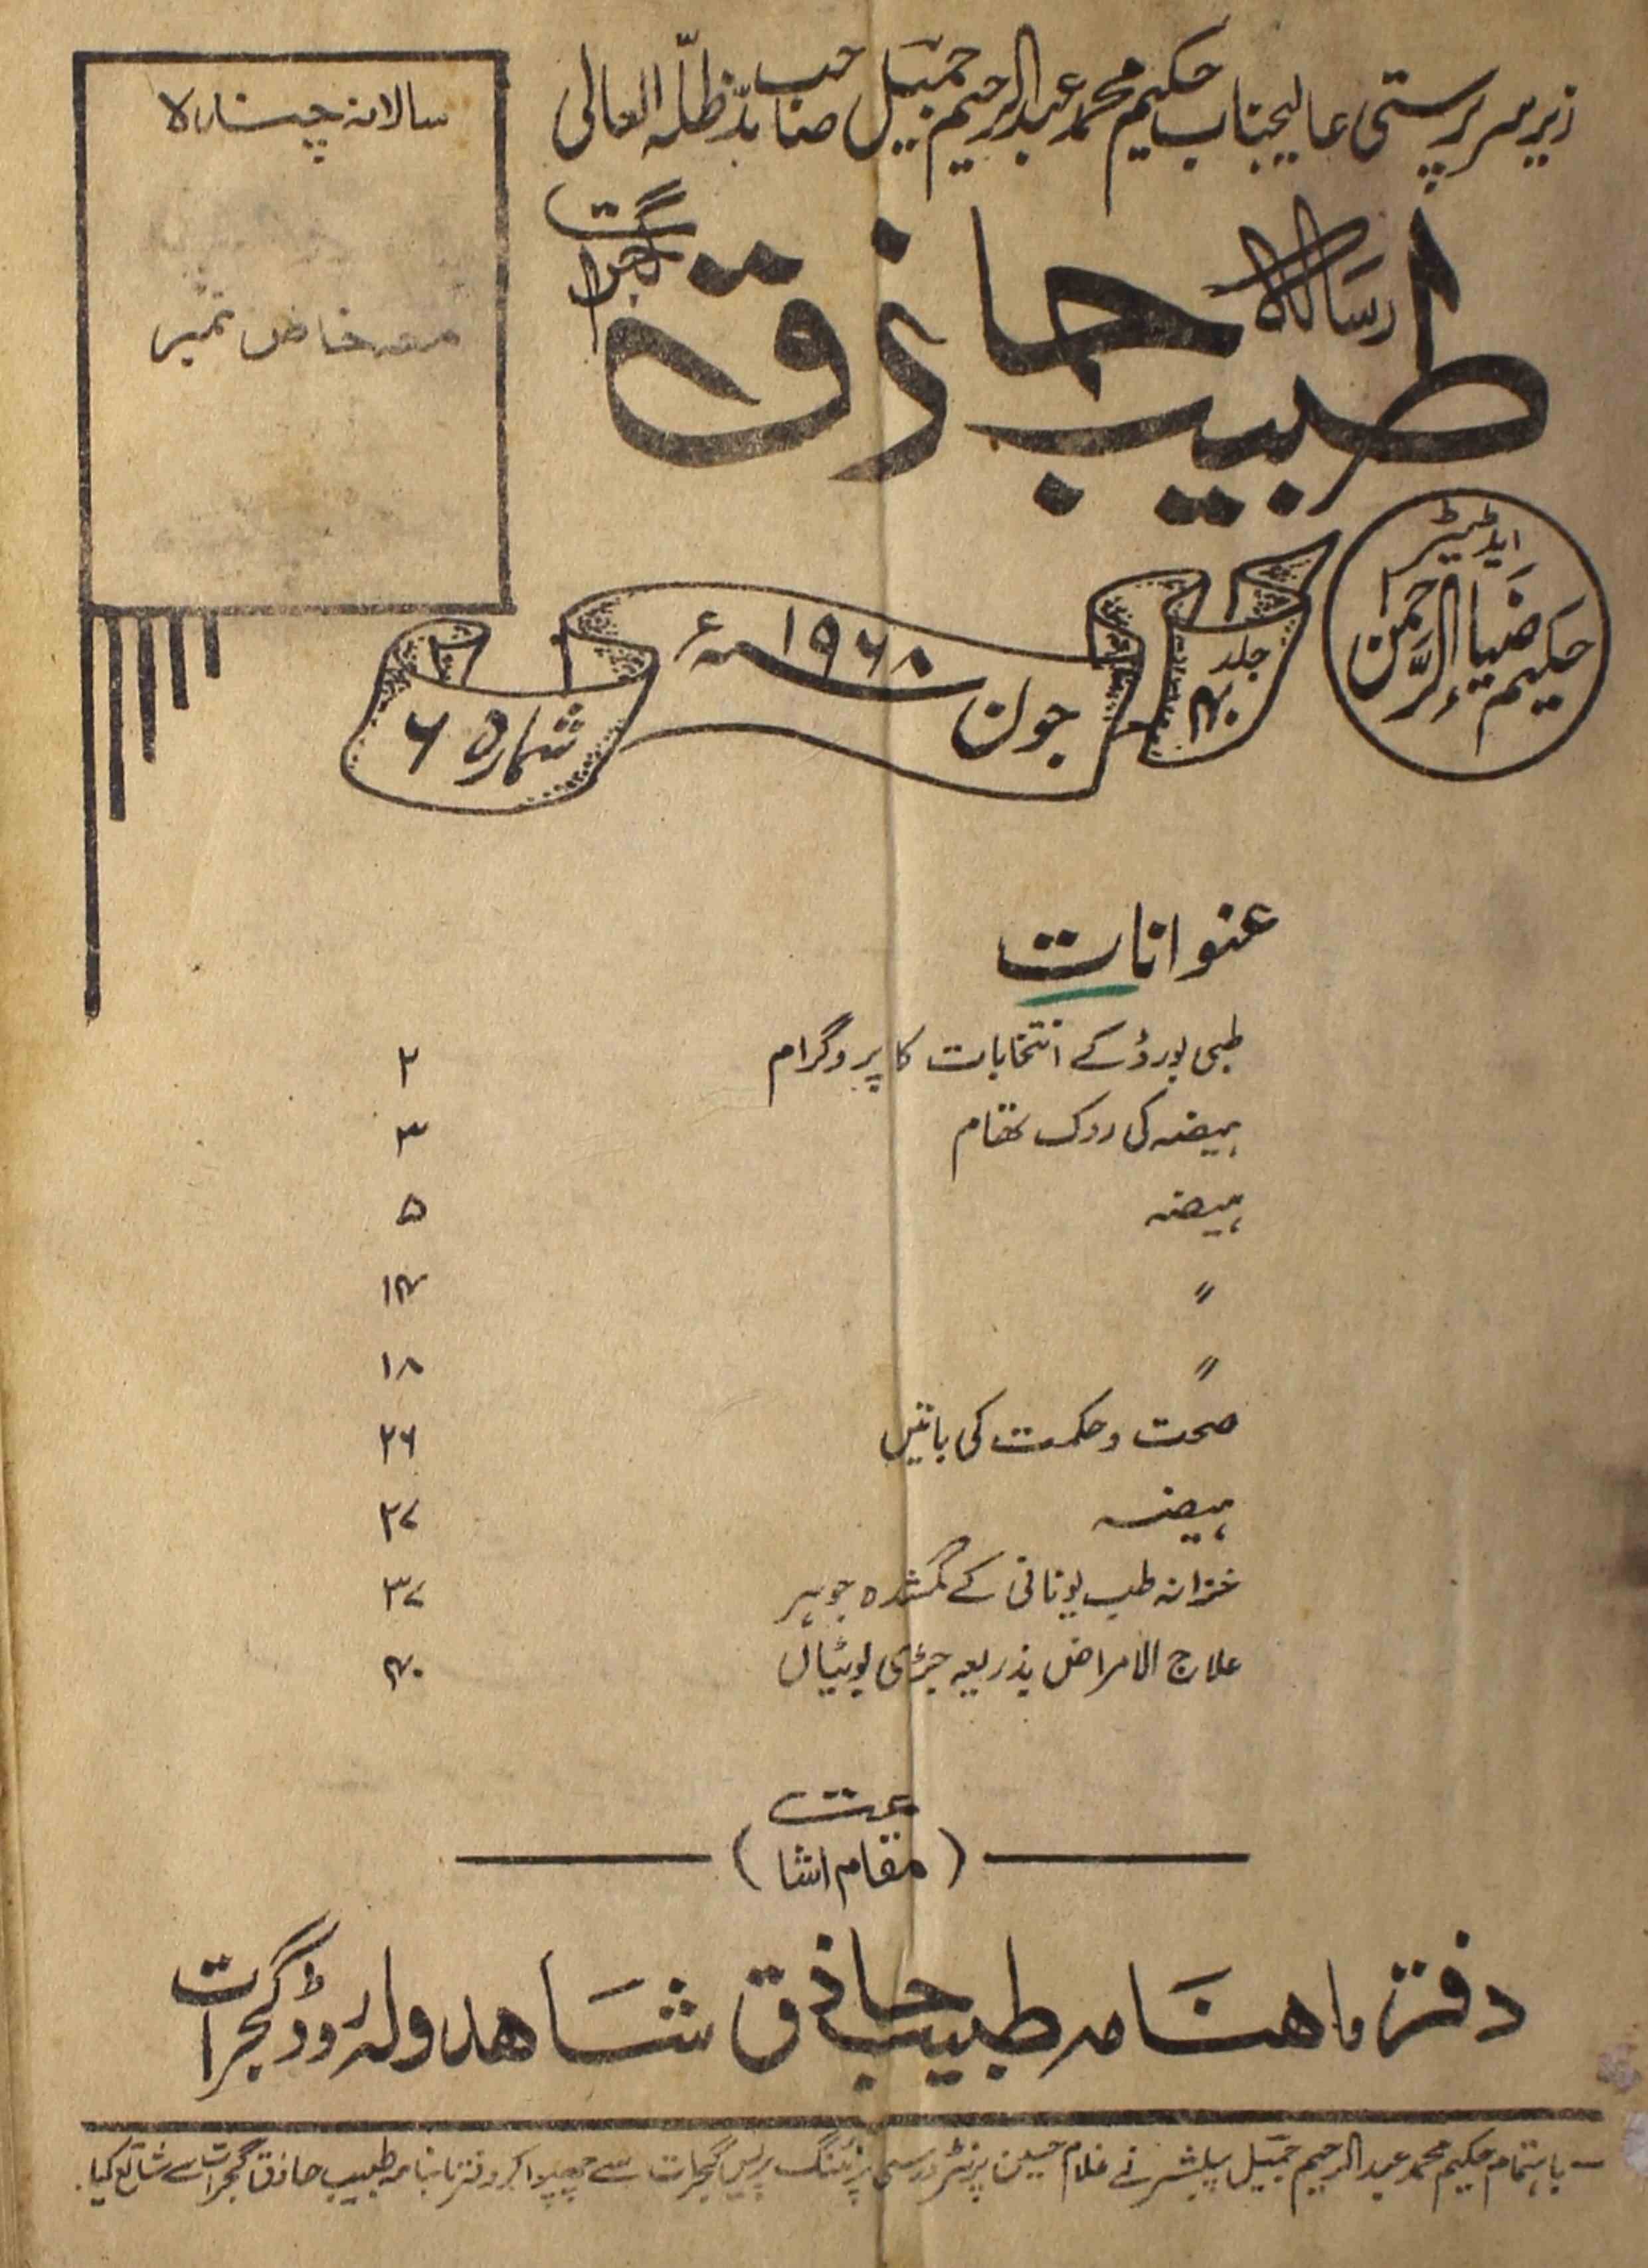 Tabib E Haziq Jild 40 Shumara 6 June 1968-Svk-Shumara Number-006